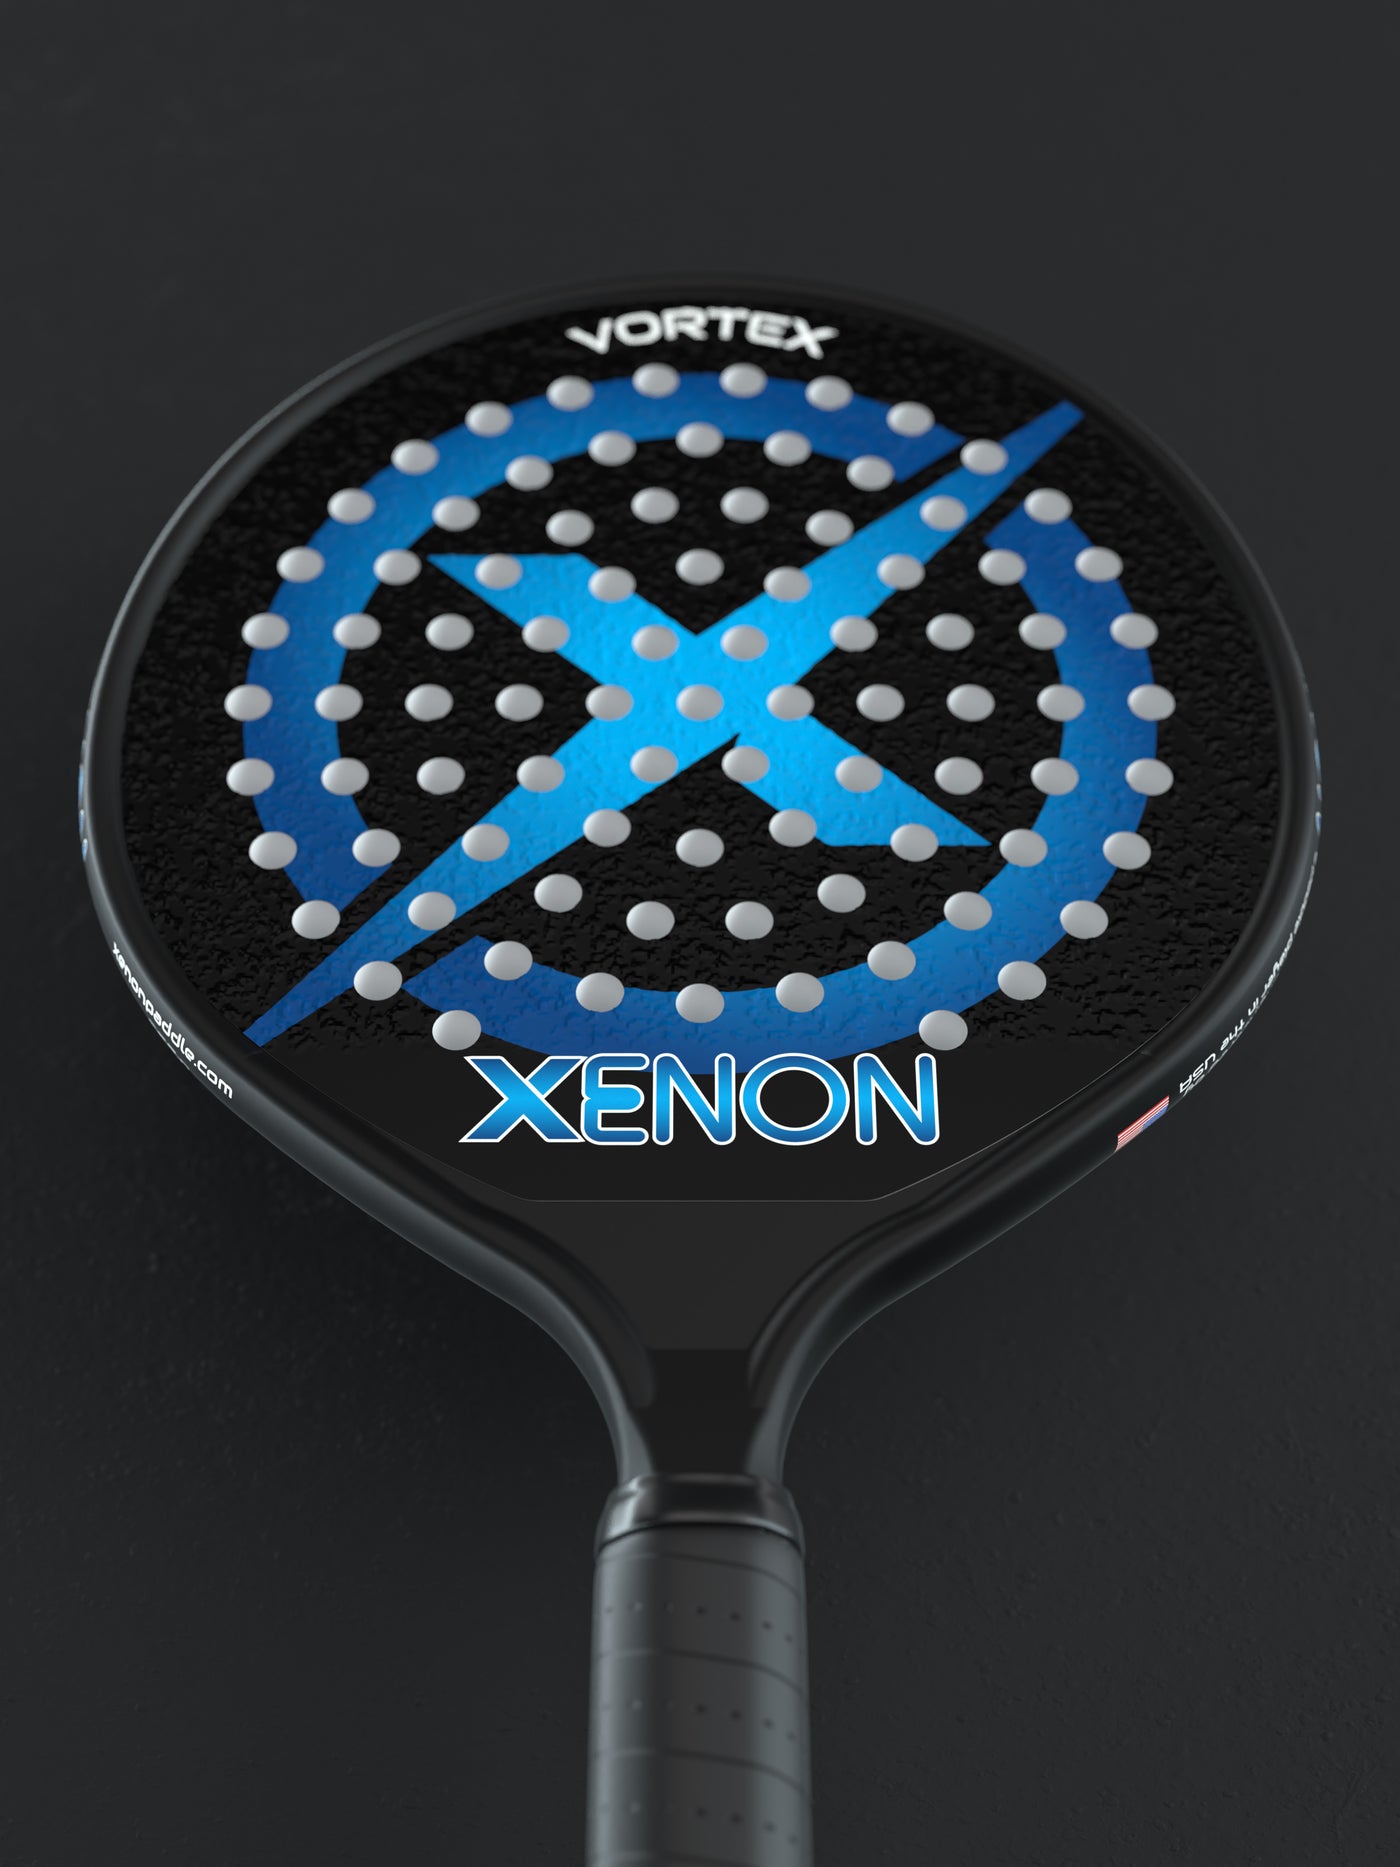 xenon paddle tennis racket vortex best seller image 2